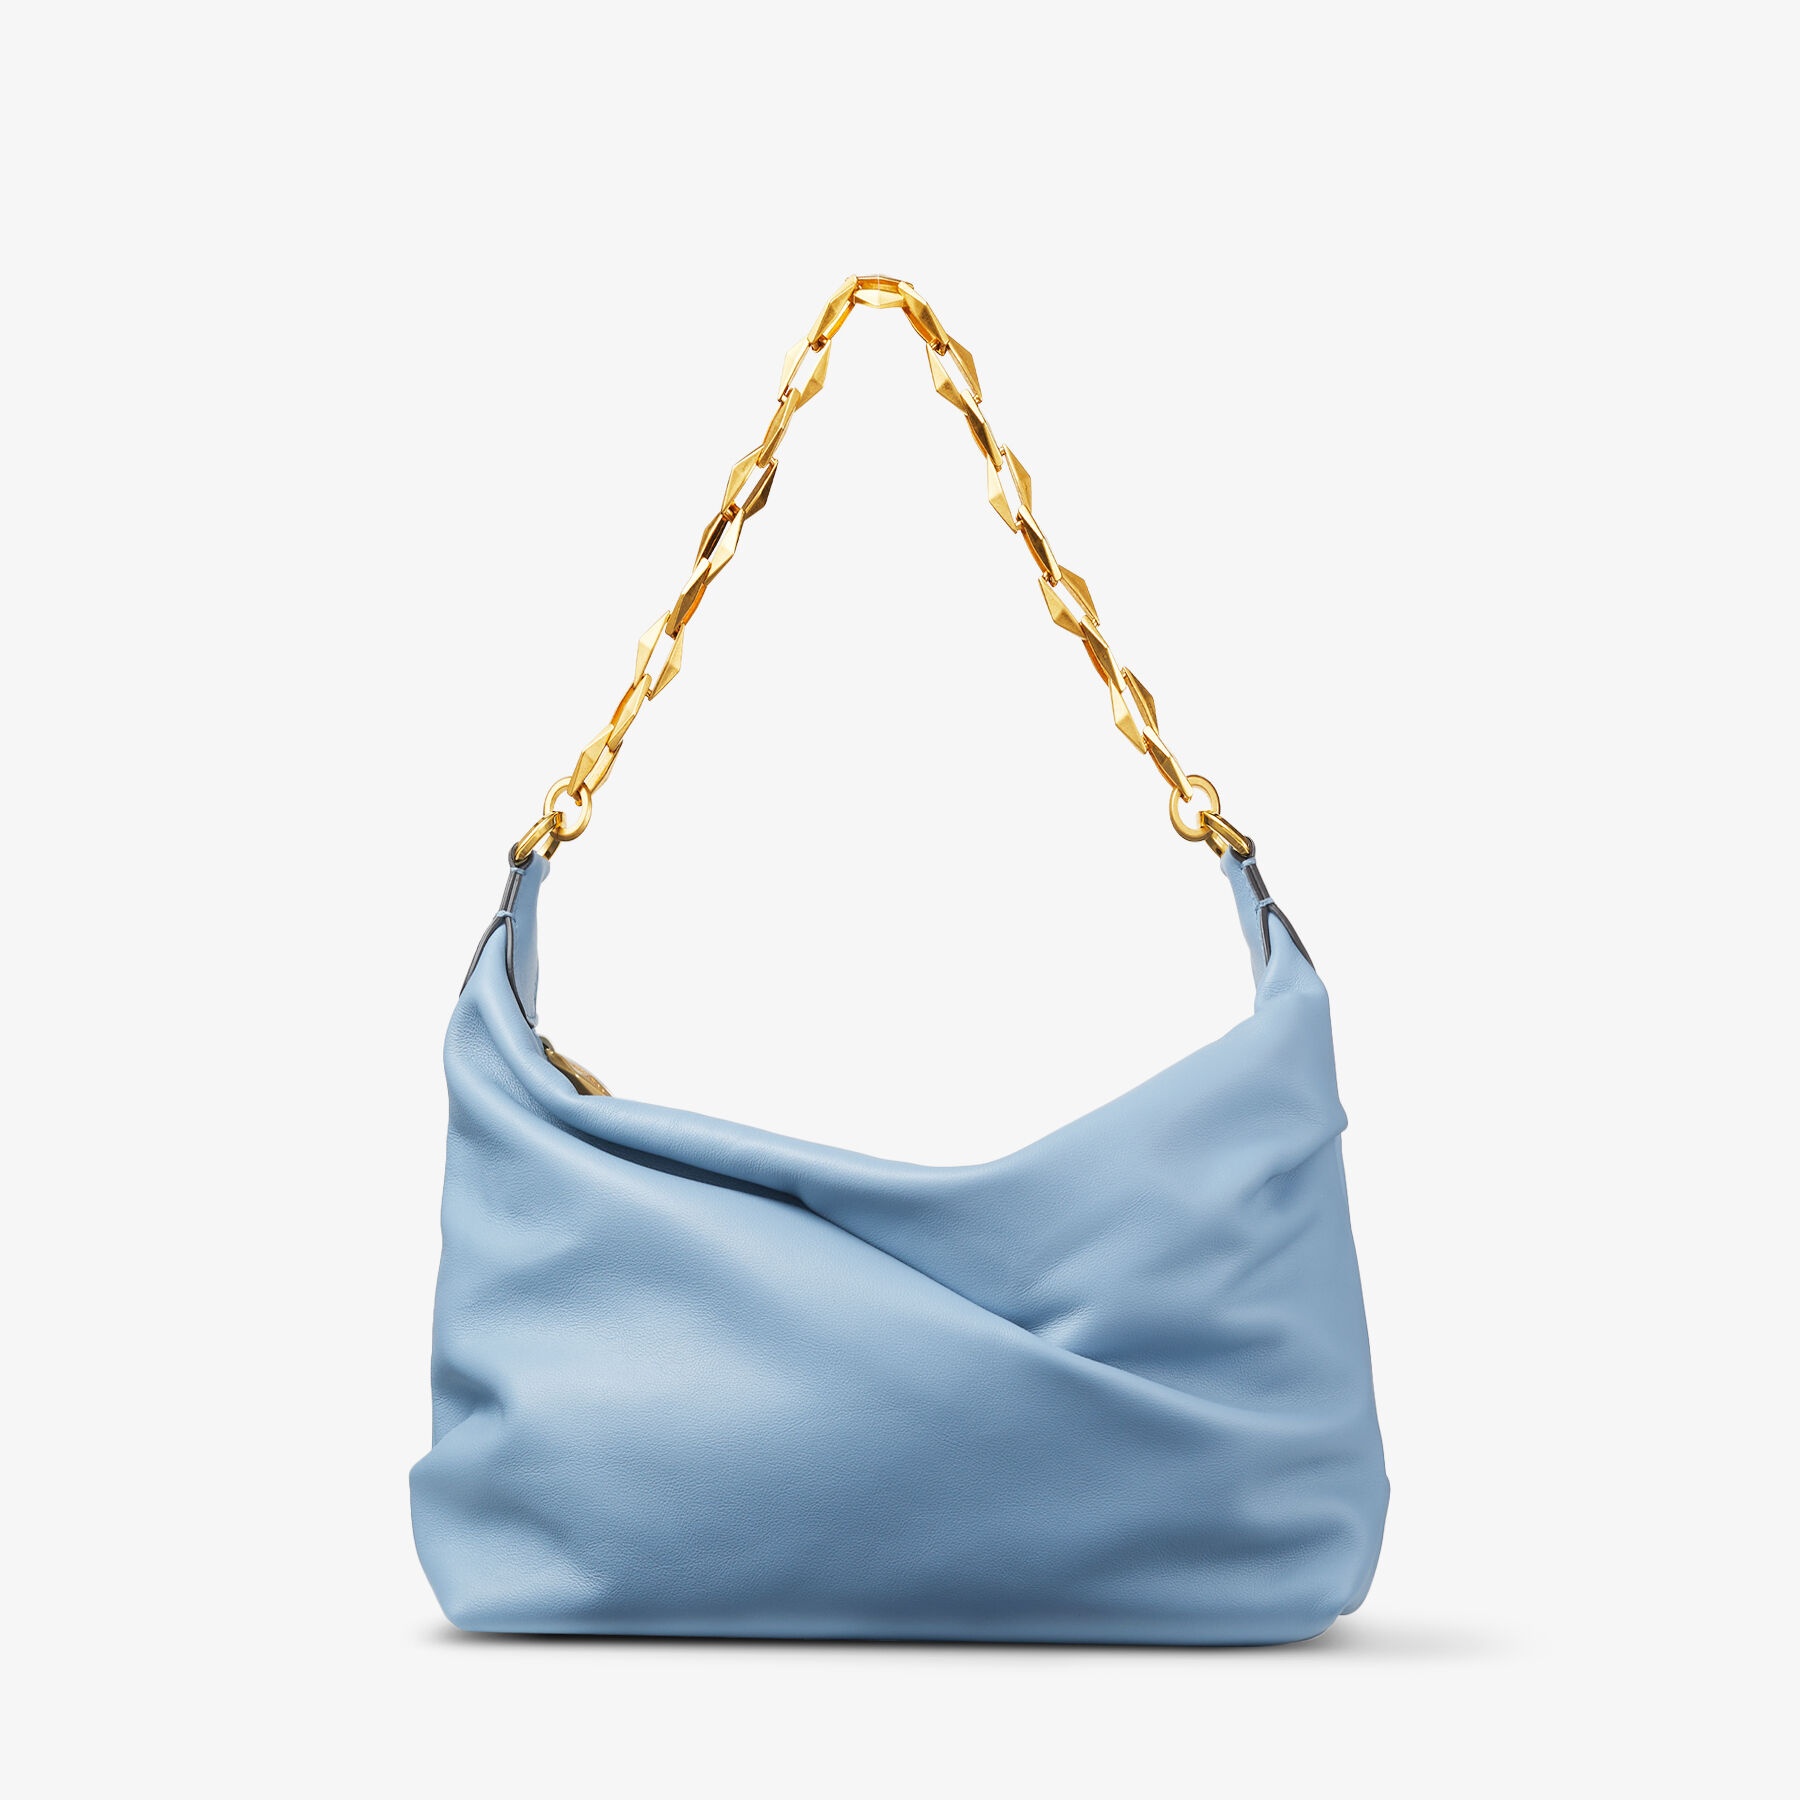 Diamond Soft Hobo S
Smoky Blue Soft Calf Leather Hobo Bag with Chain Strap - 1